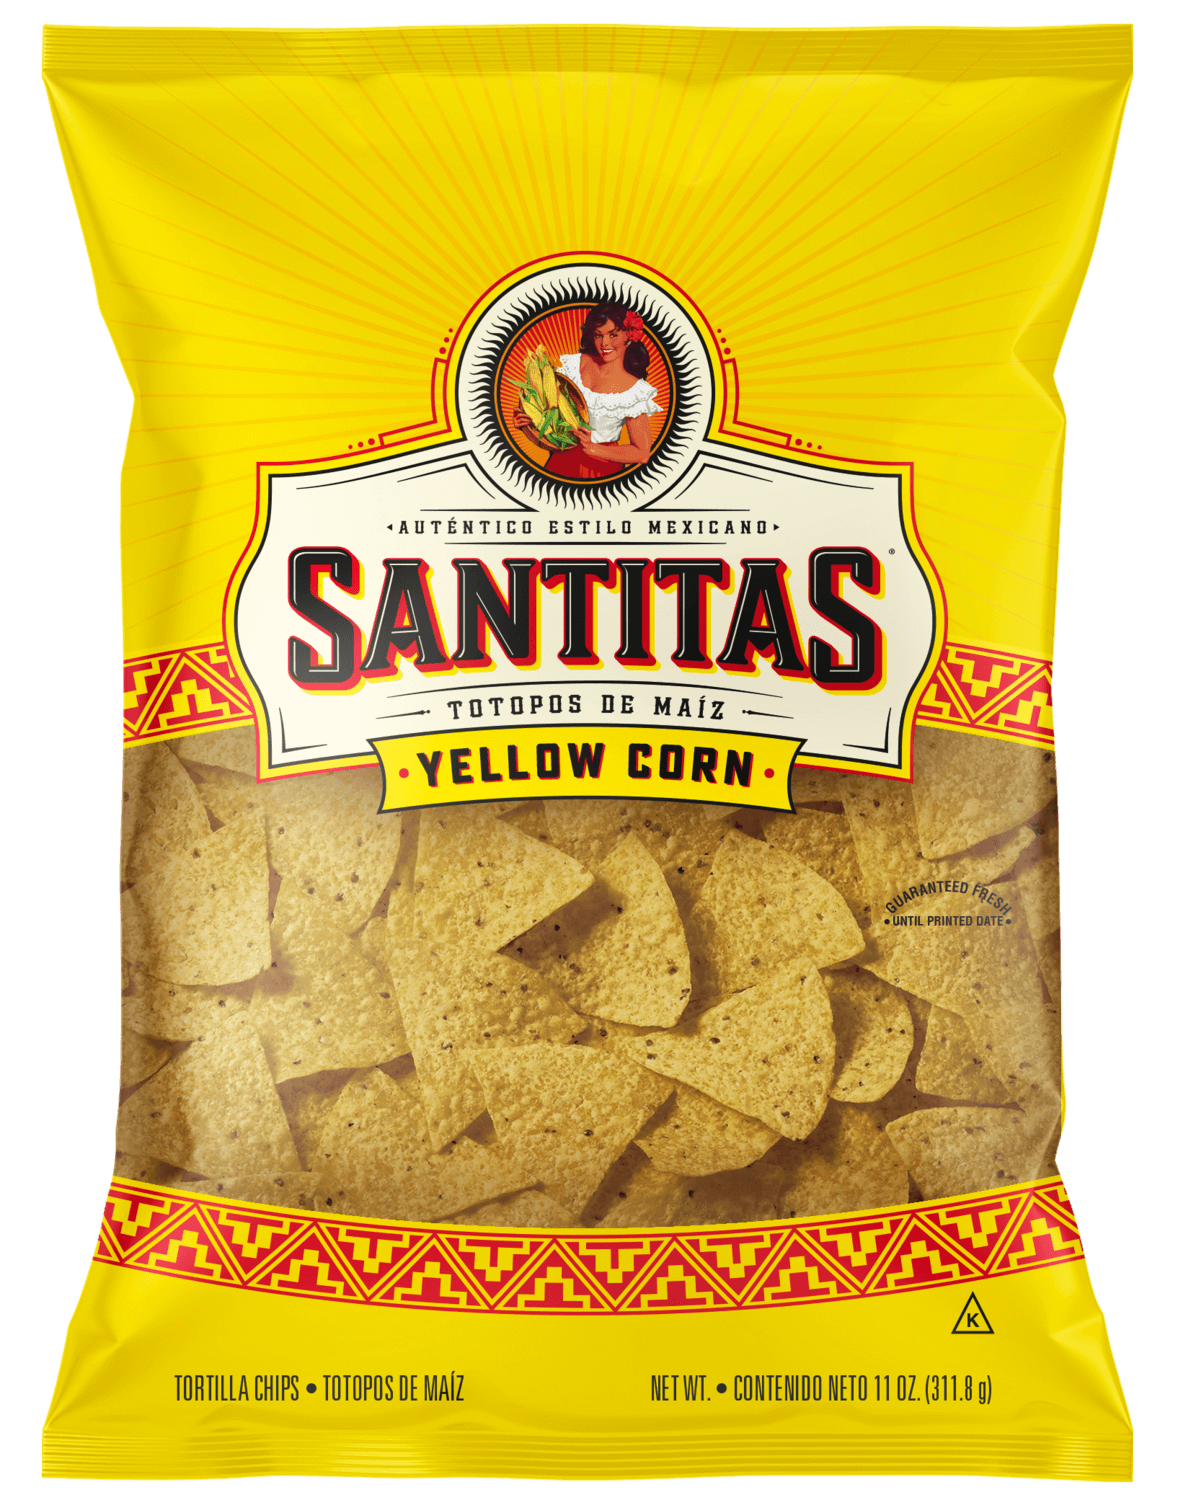 SANTITAS® Yellow Corn